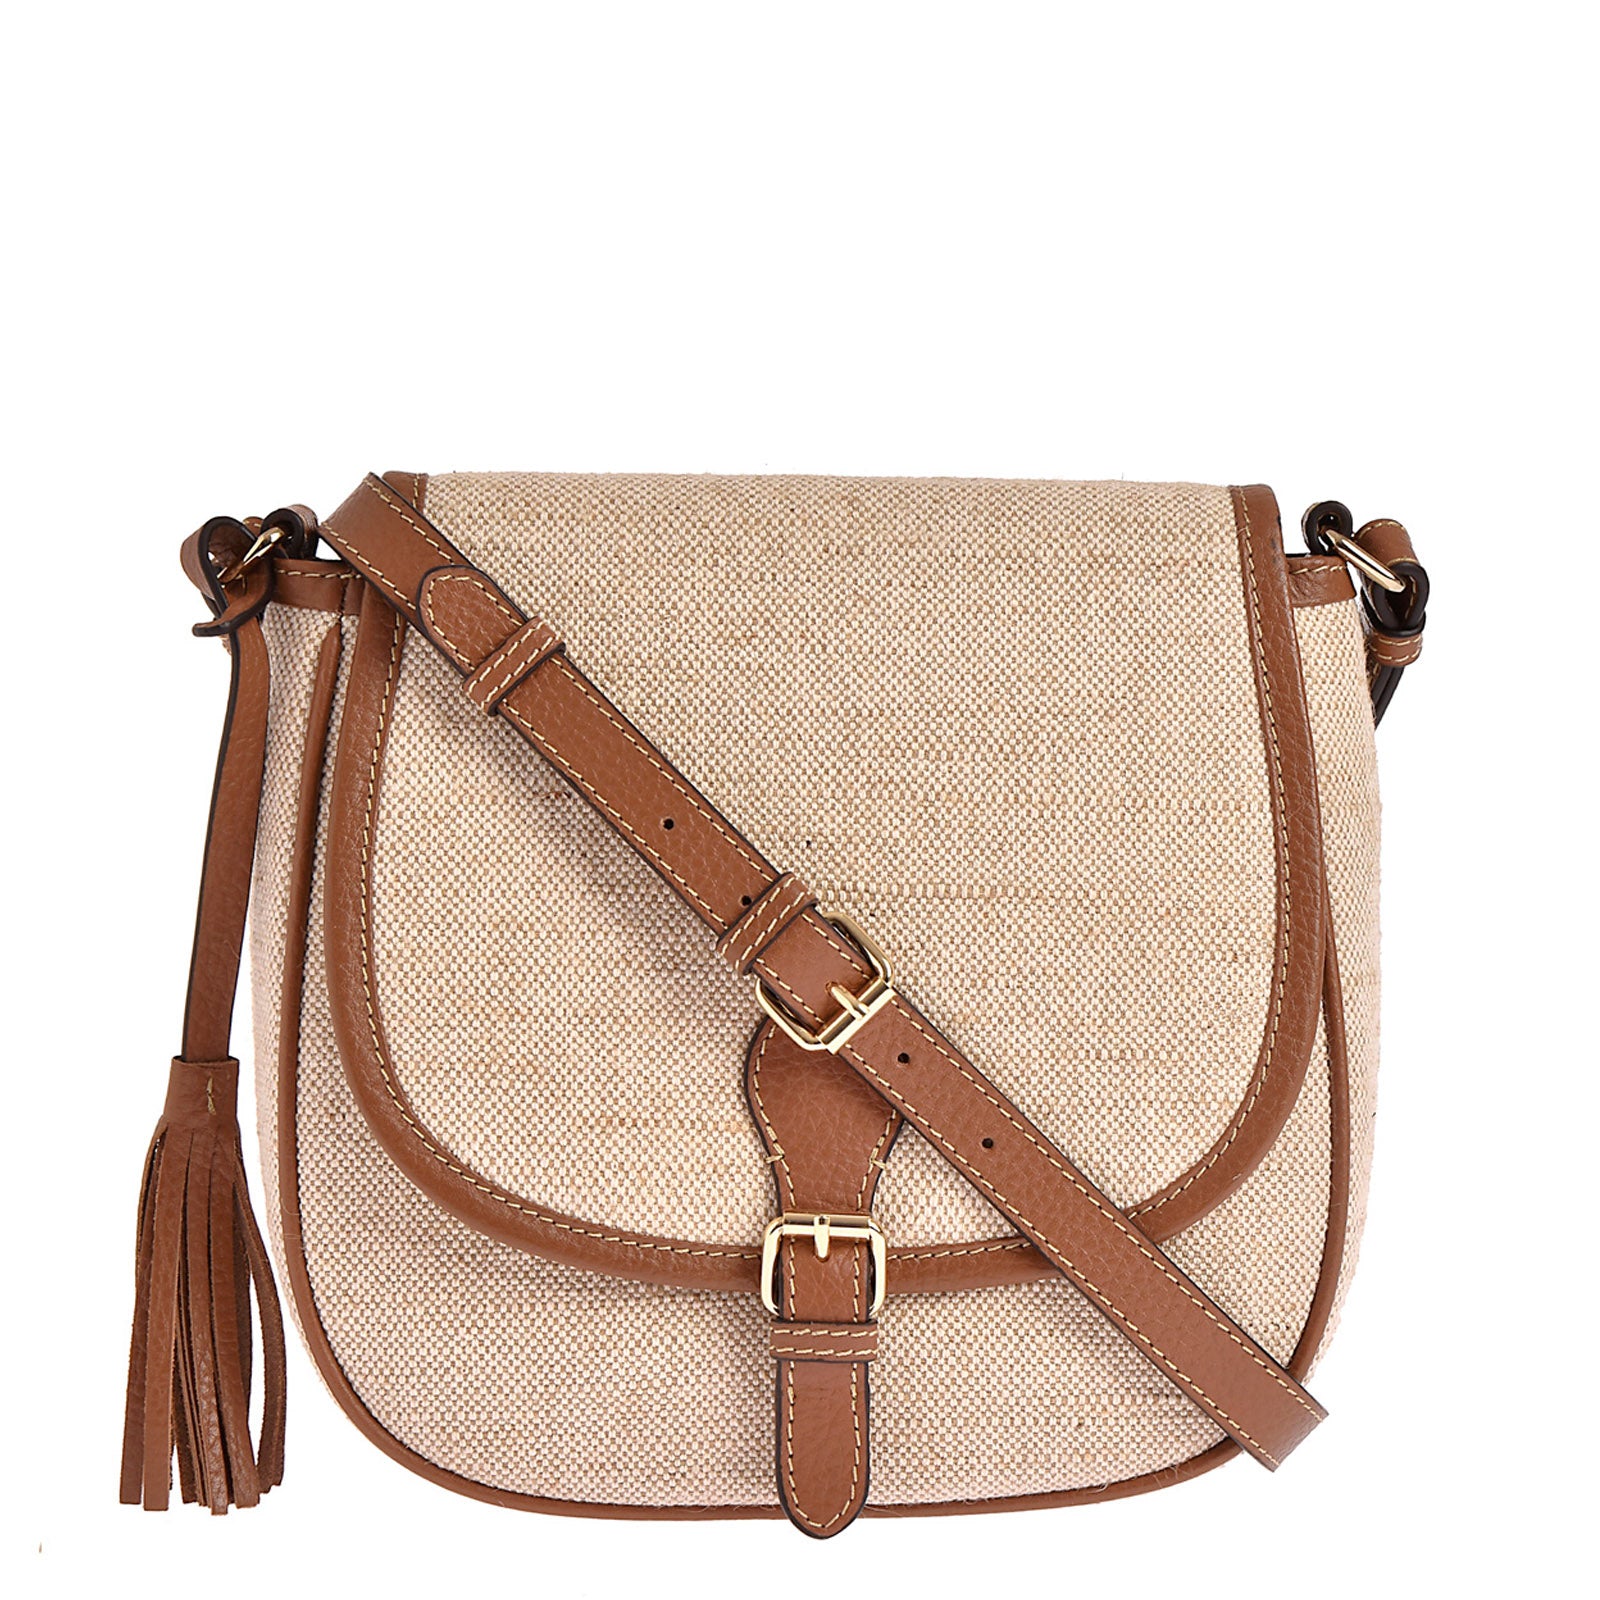 LIVIA - Canvas and leather messenger bag